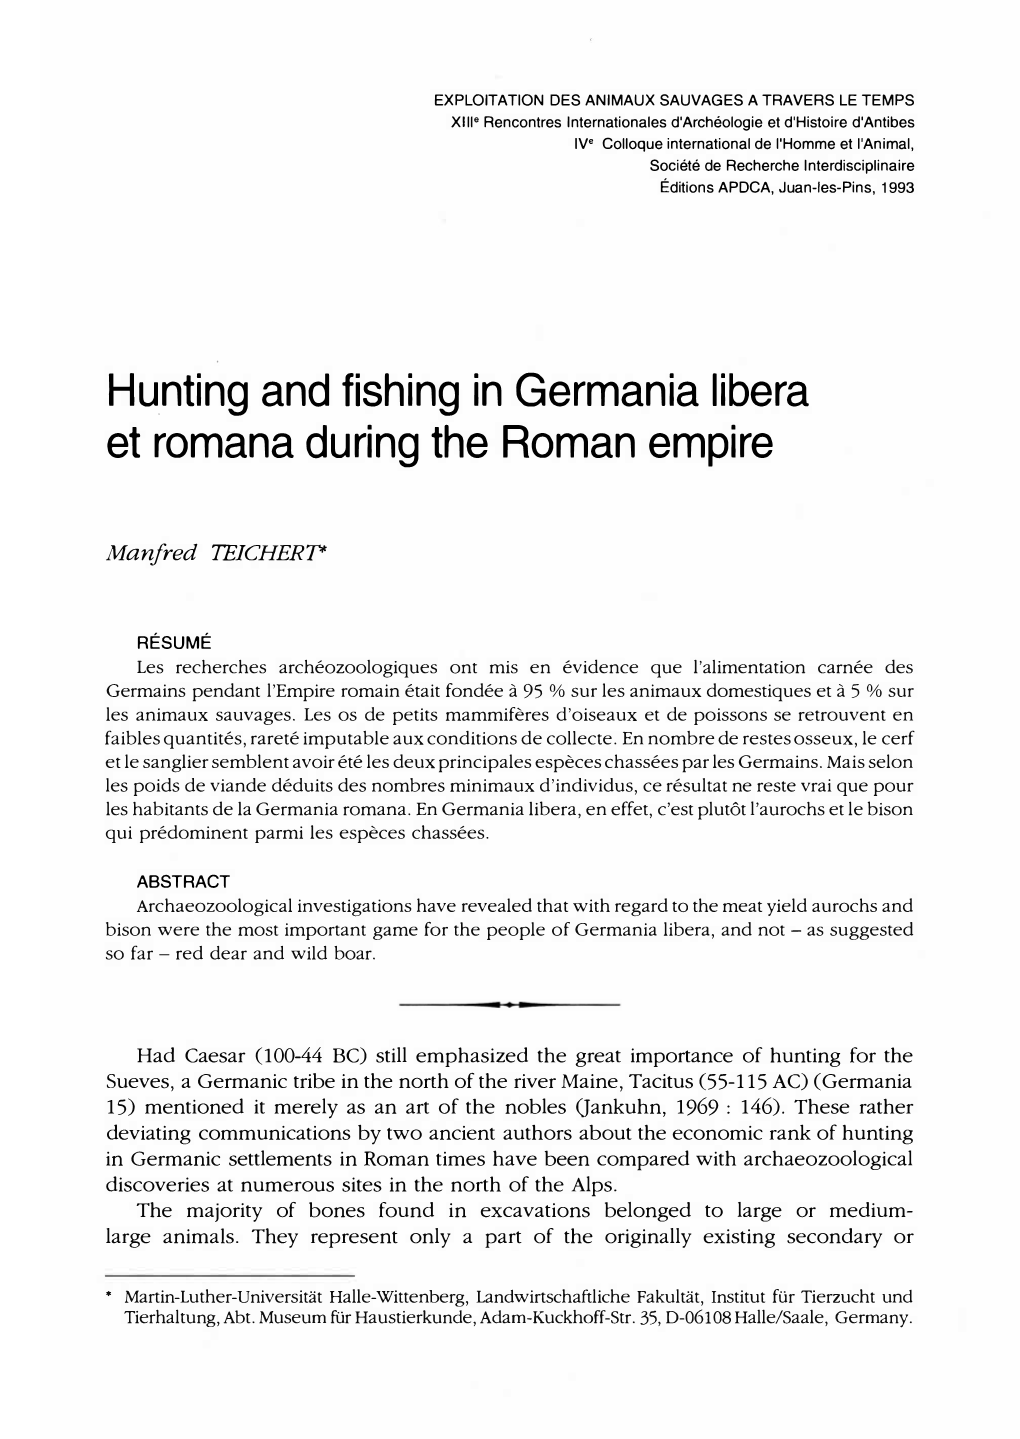 Hu.Nting and Fishing in Germania Libera Et Romana During the Roman